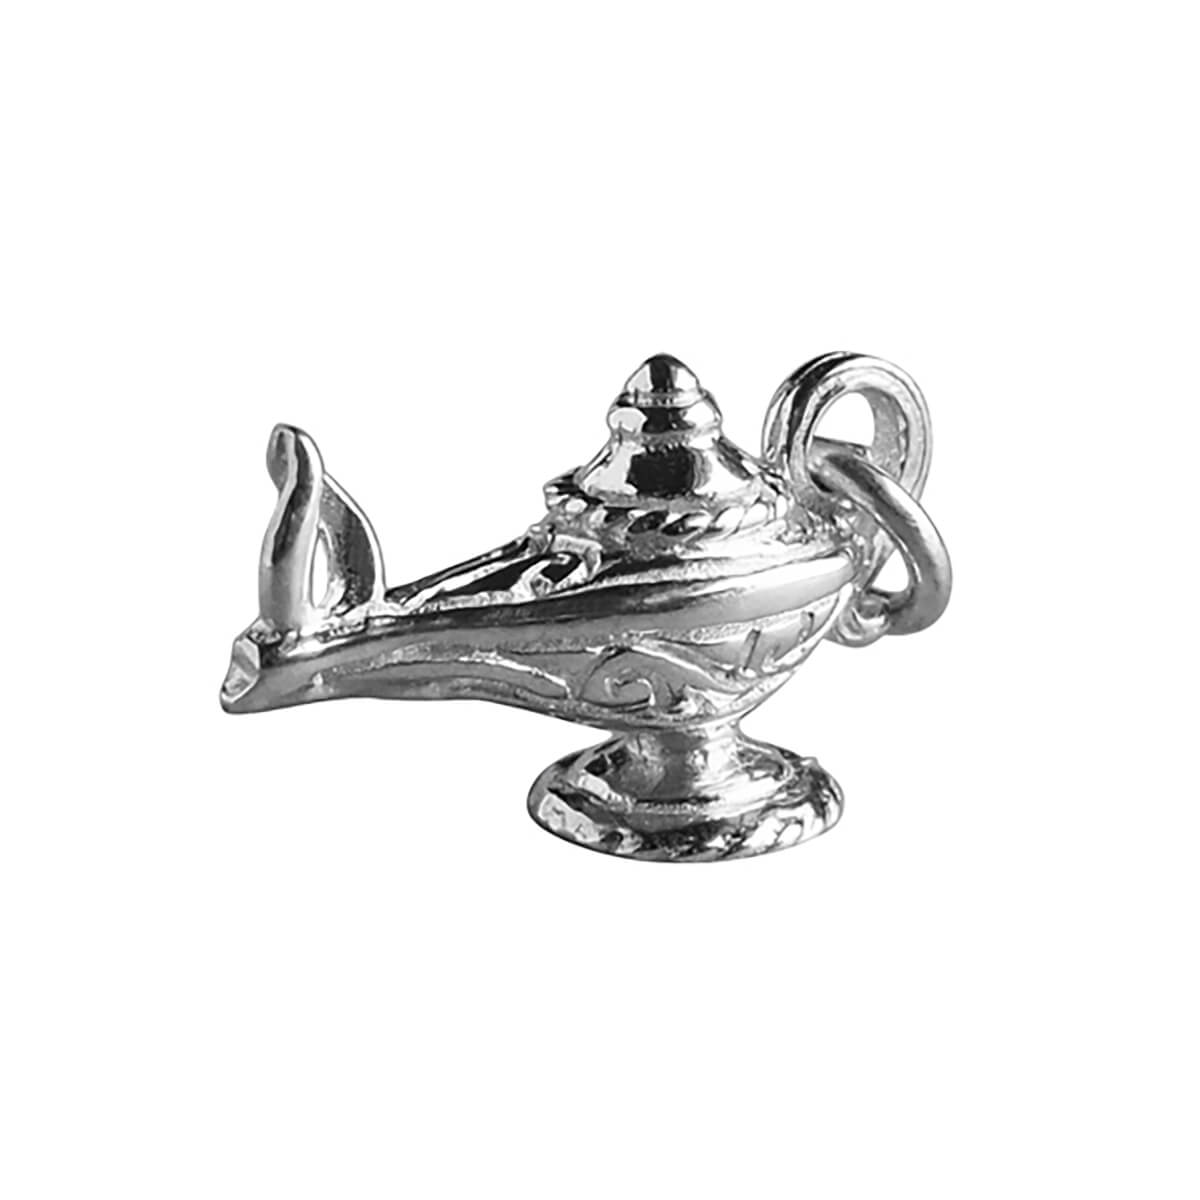 Aladdin's lamp sterling silver genie pendant